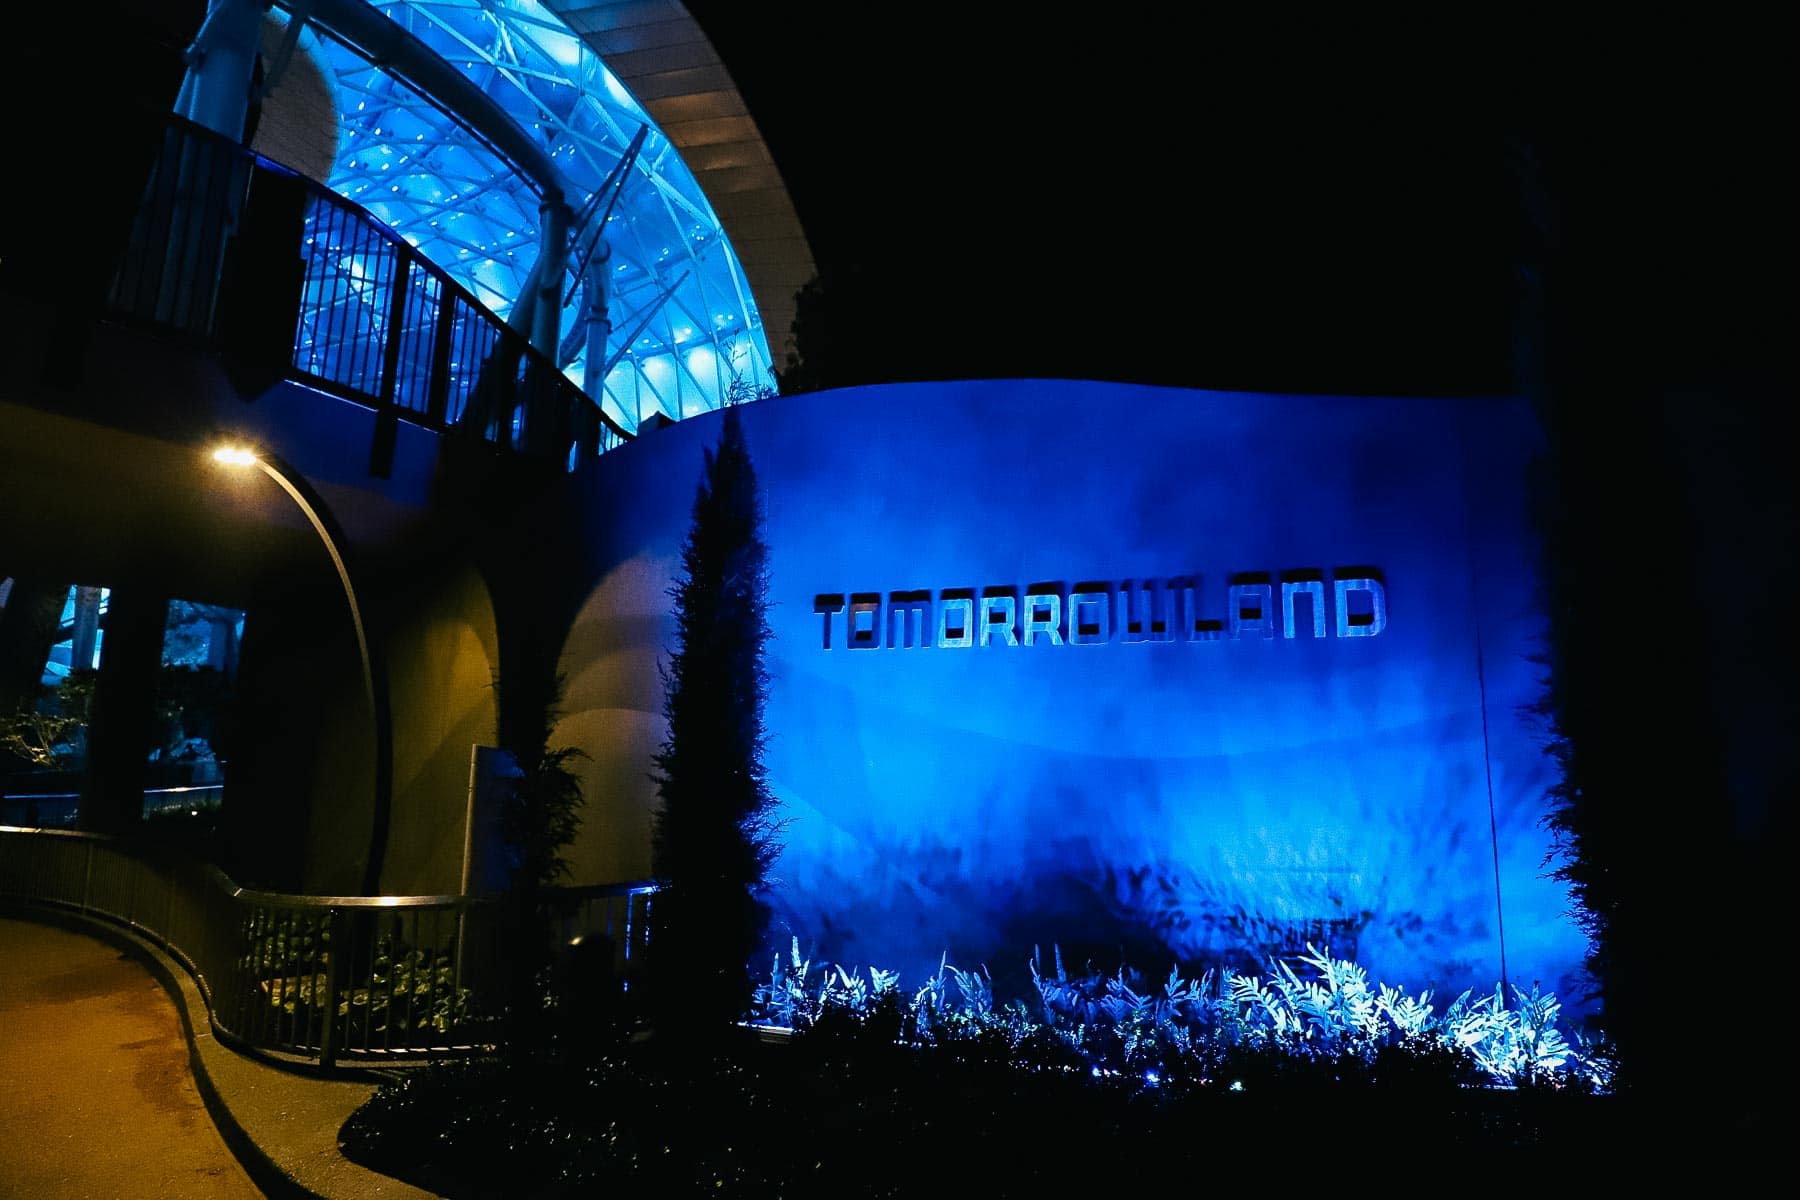 Tomorrowland sign near Tron Lightcycle Run 